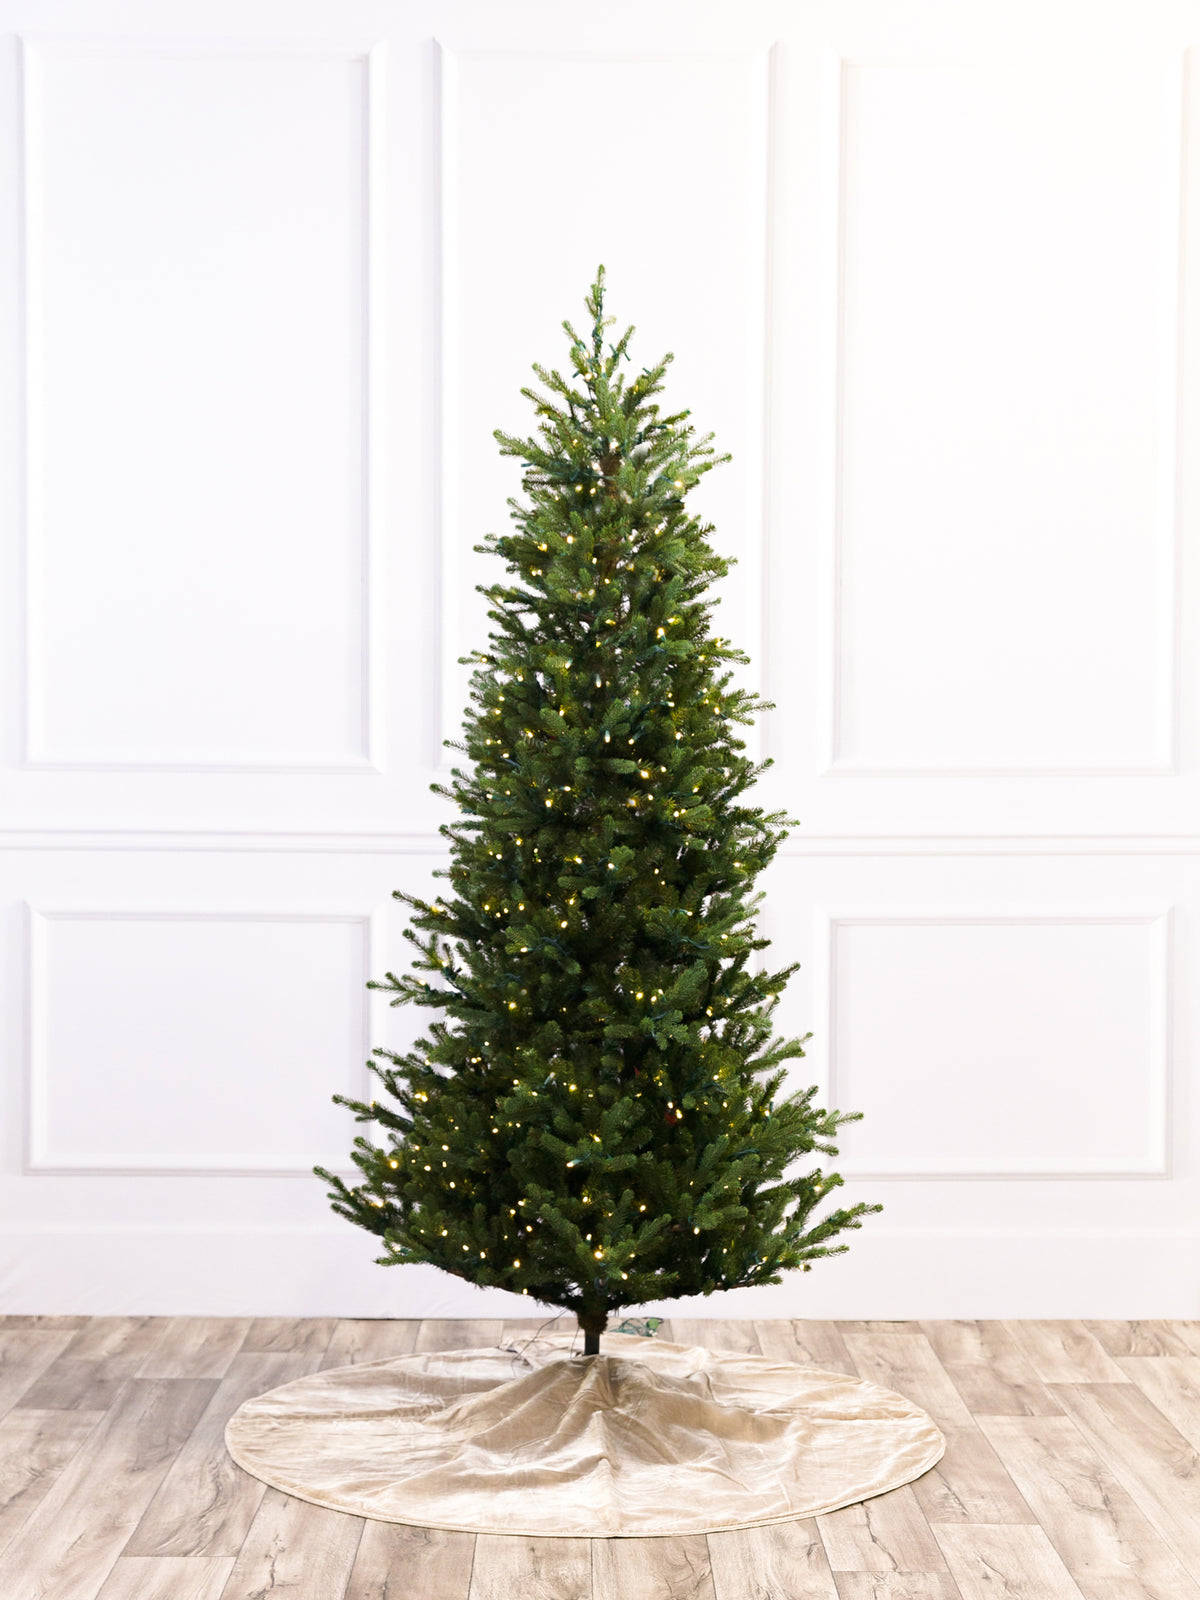 7.5' Carolina Frasier Fir Slender Christmas Tree with 5mm RGBWW